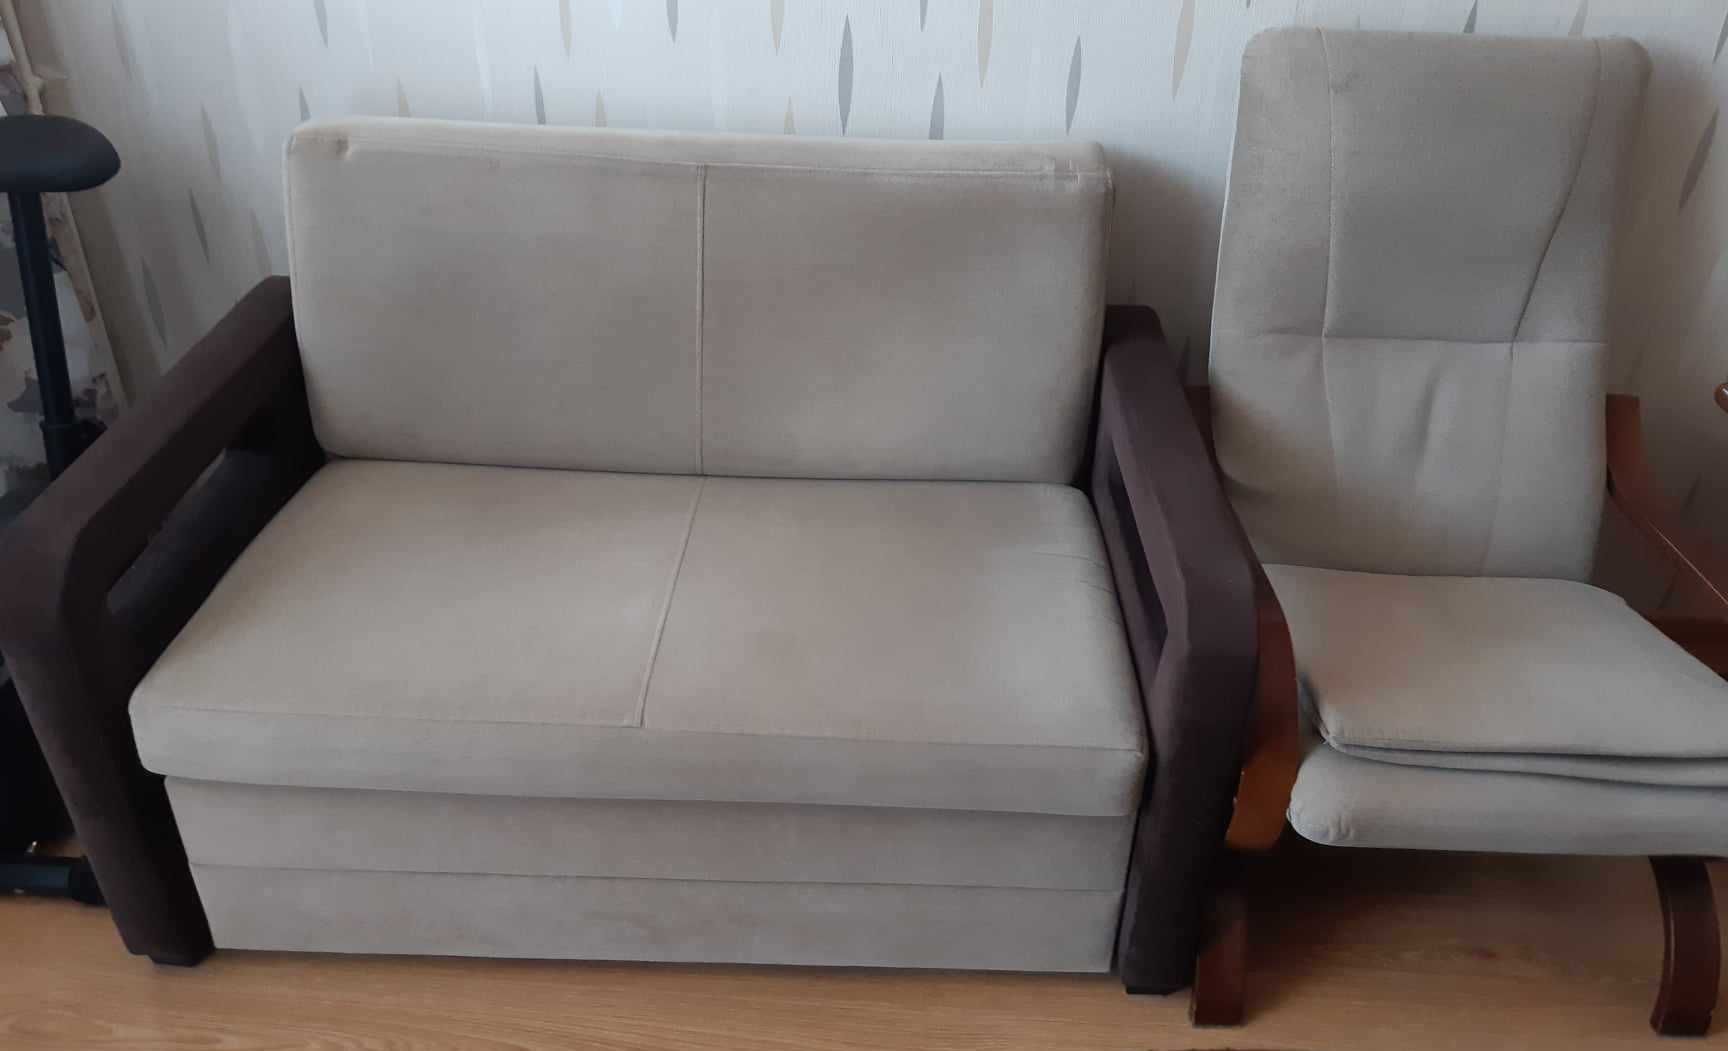 sofa dwuosobowa + fotel